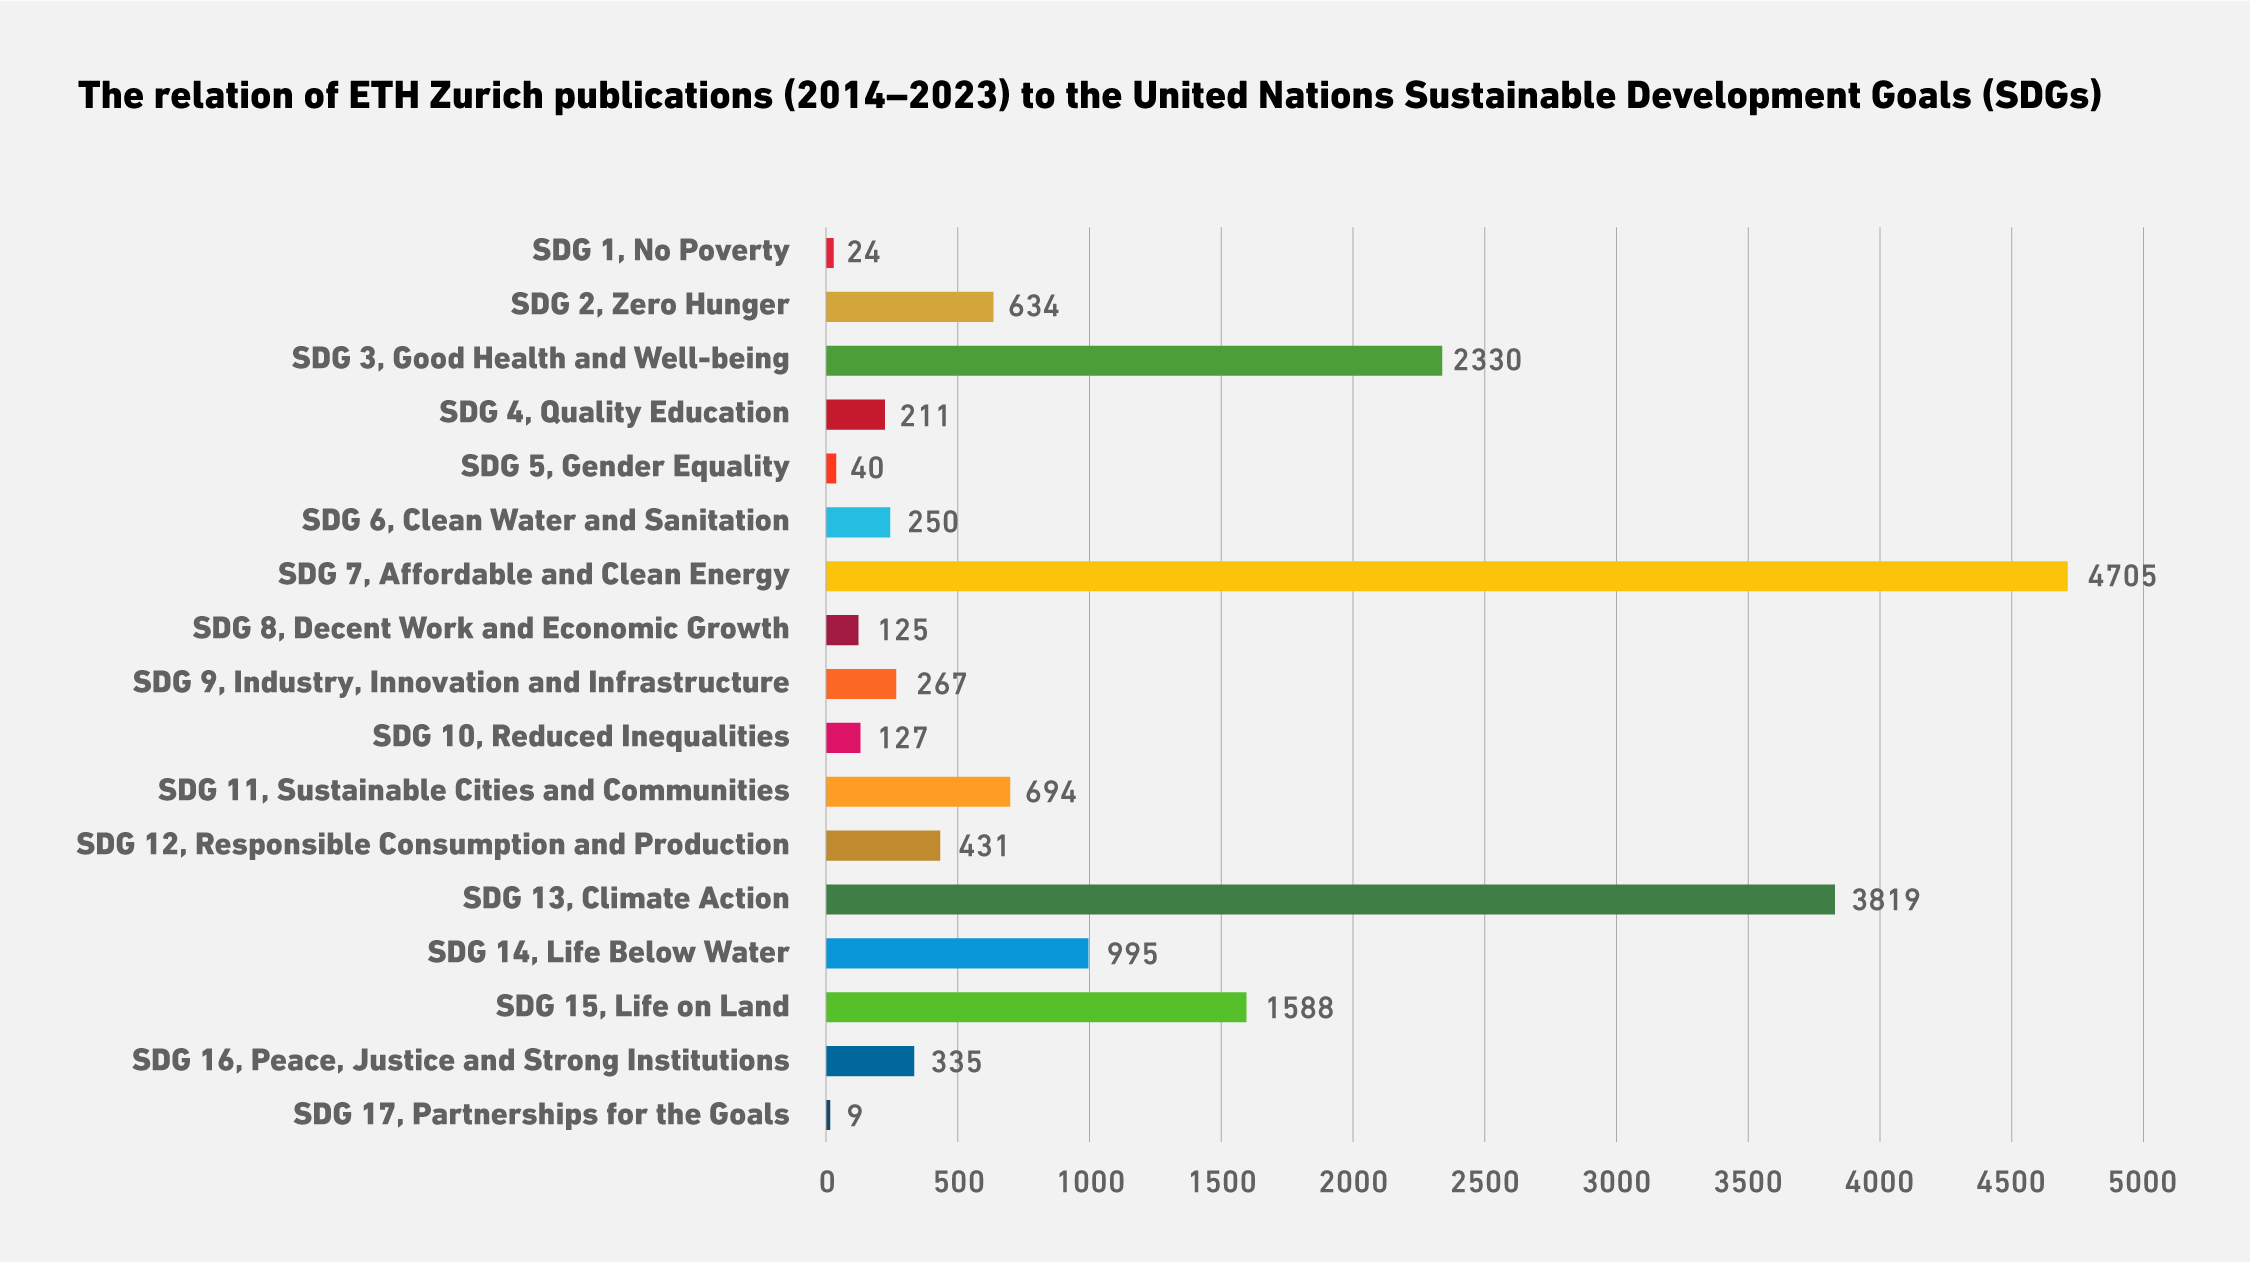 Enlarged view: The relation of ETH Zurich publications (twenty fourteen to twenty twenty-three) to the United Nations Sustainable Development Goals (SDGs)